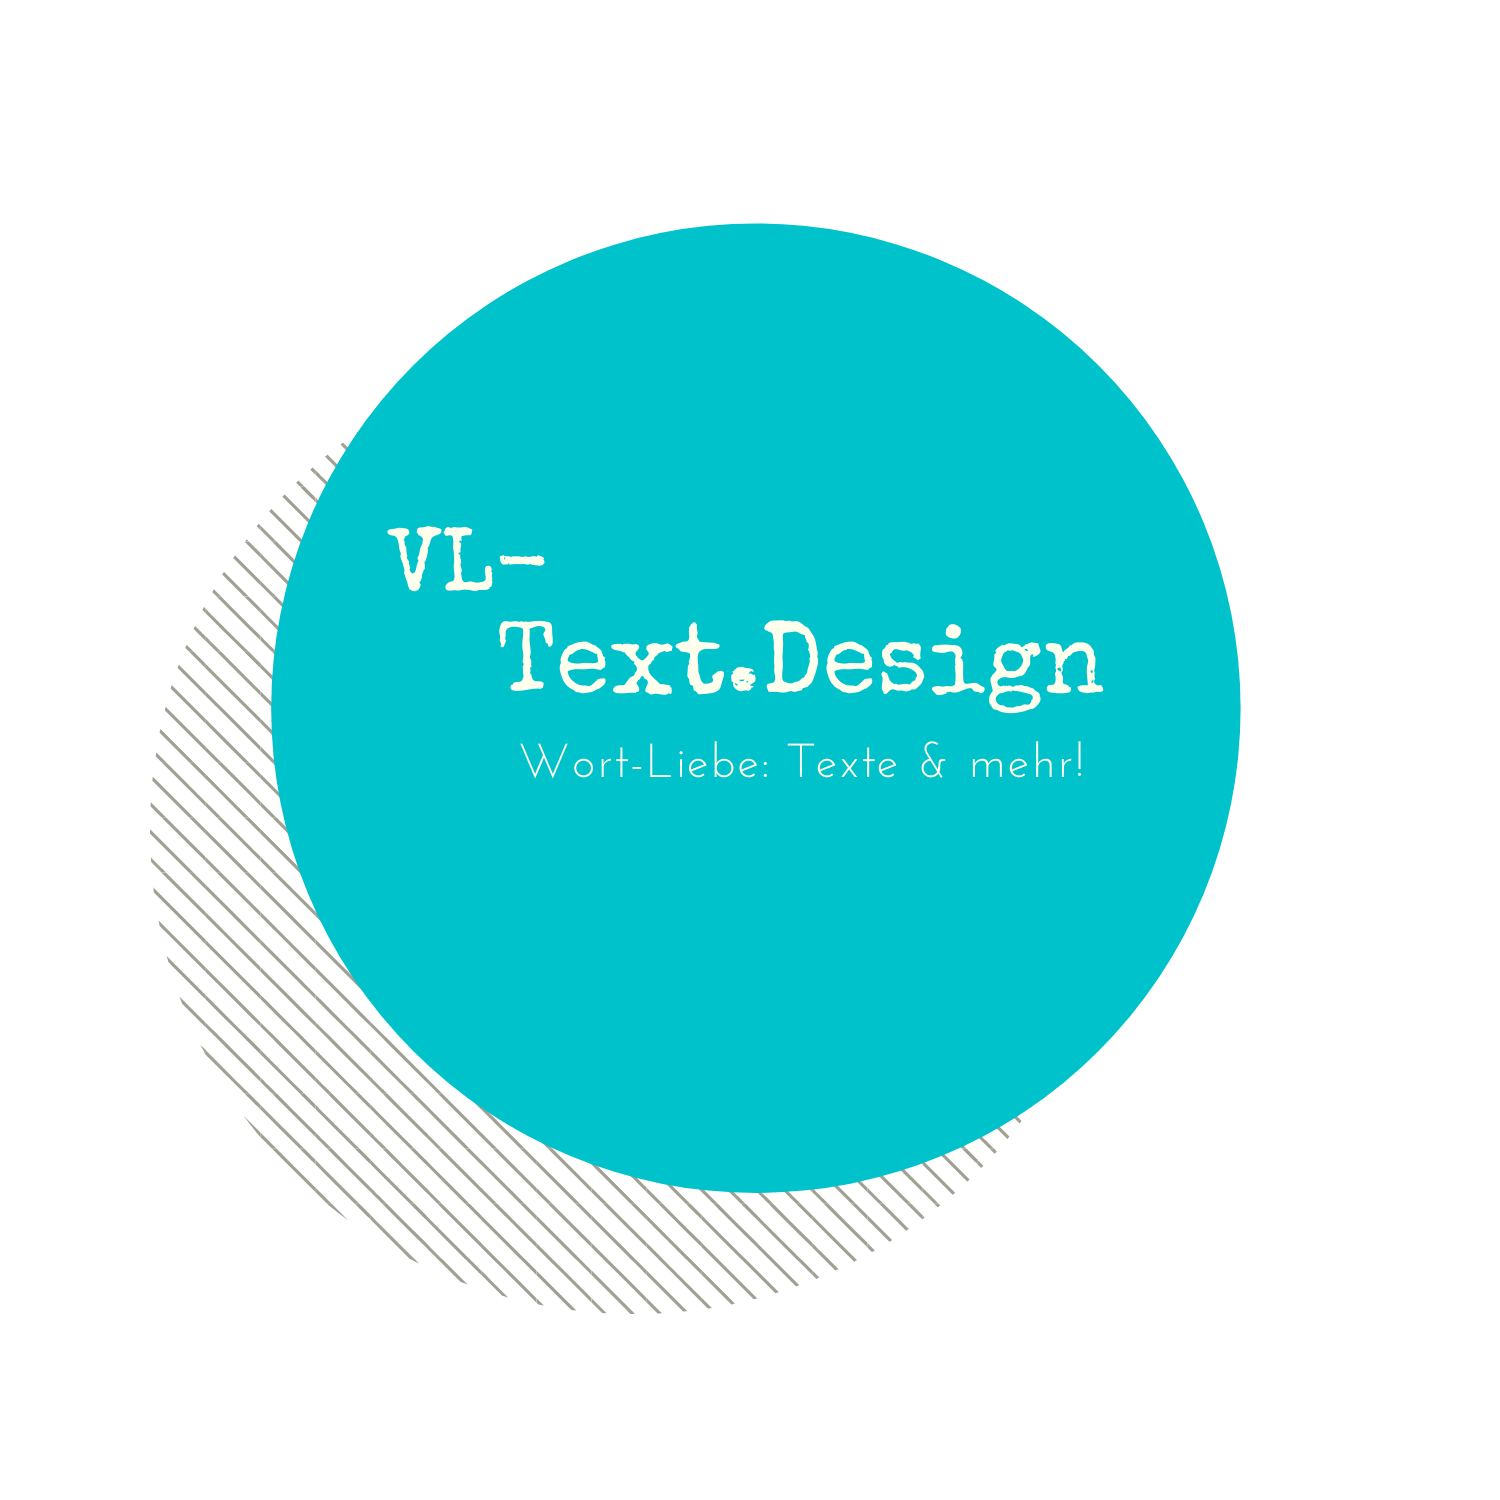 Text.Design